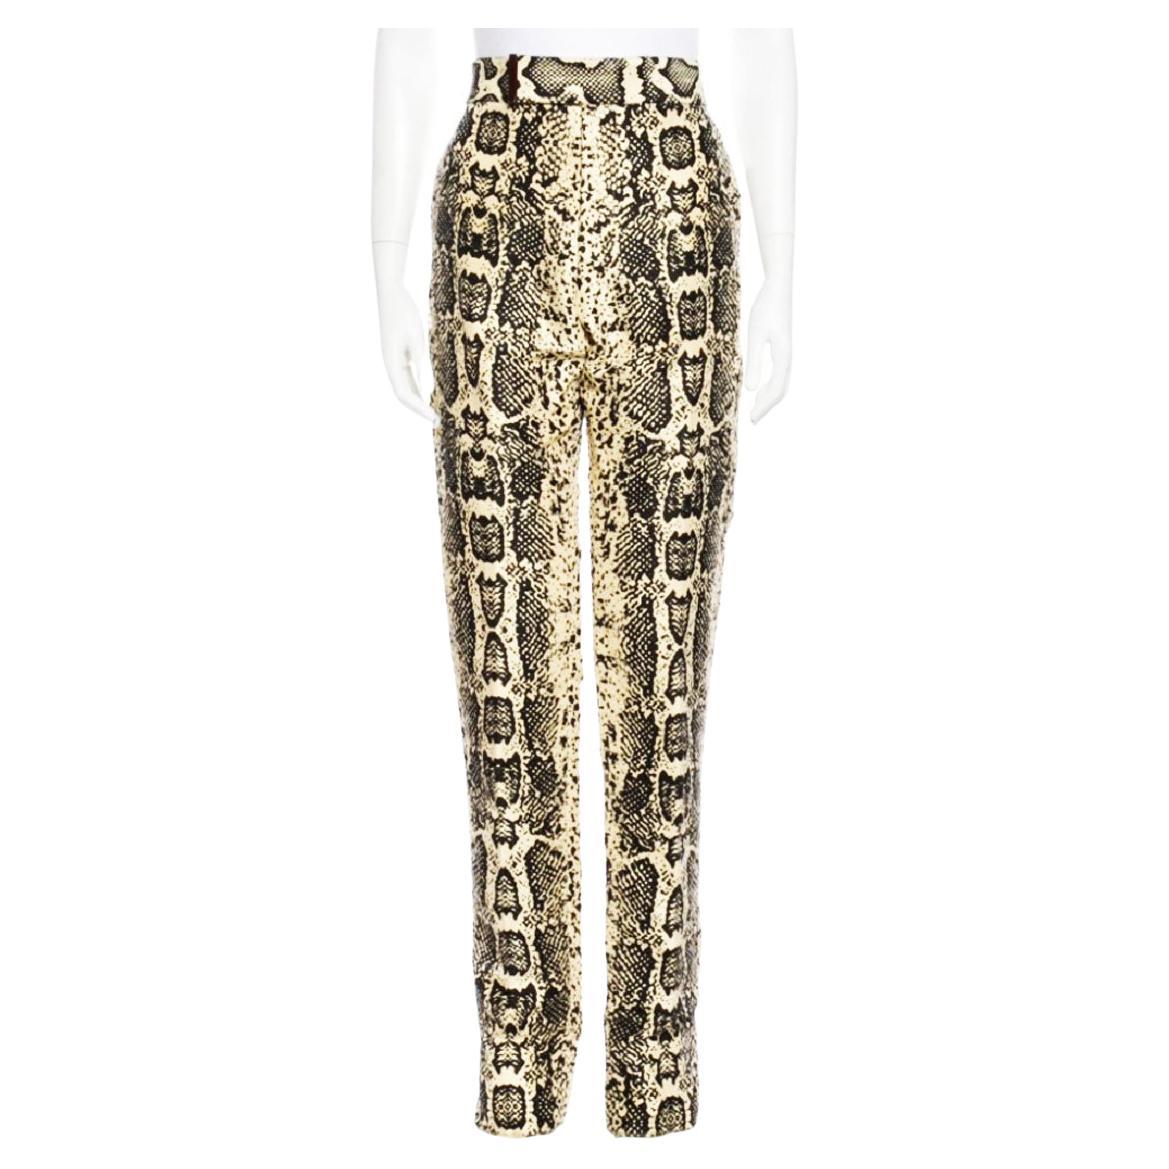 Tom Ford $4750 S/S 2021 Women's Snakeskin-Print Silk Pants Trousers 48 R